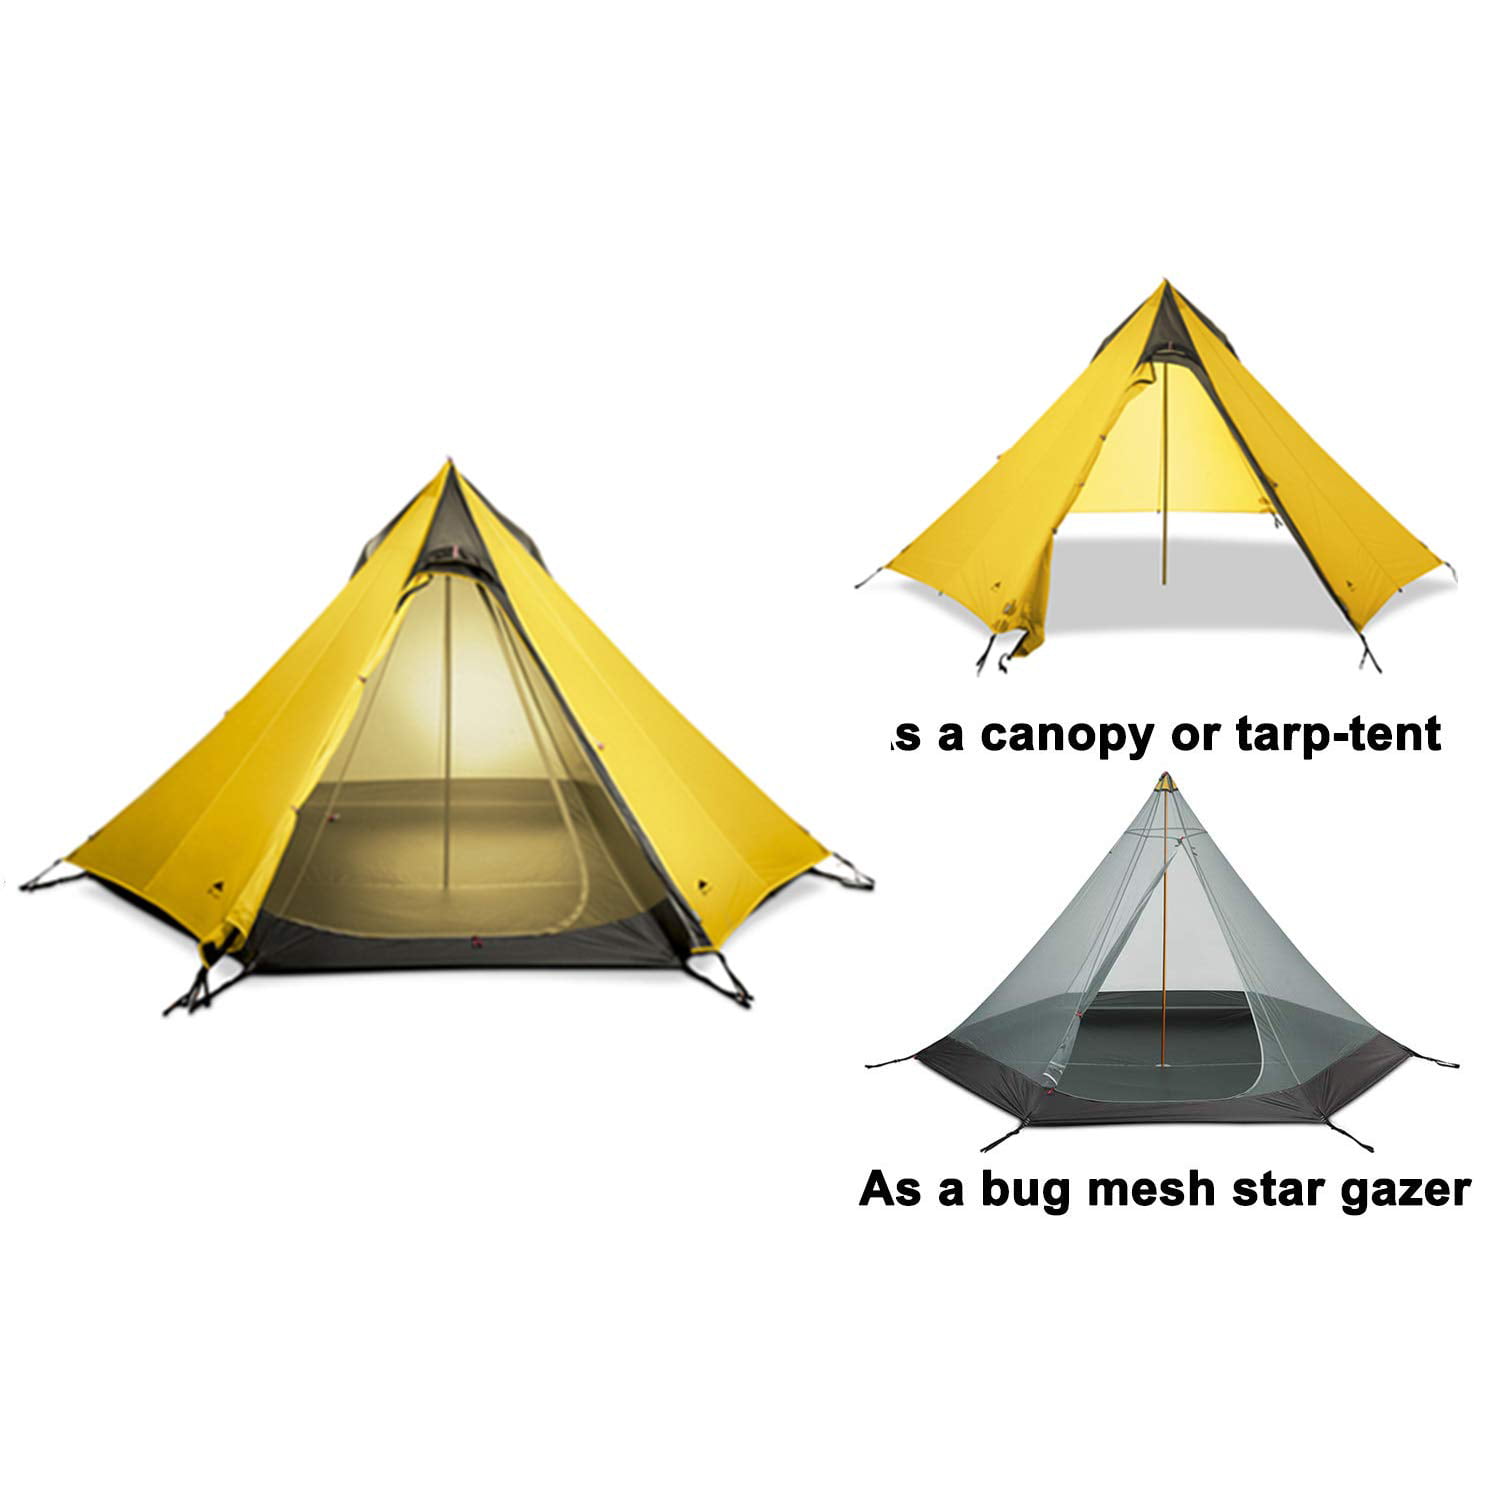 Wholesale Outdoor Ultralight Camping Tent 3 Season LanShan 3F UL GEAR 2 Person